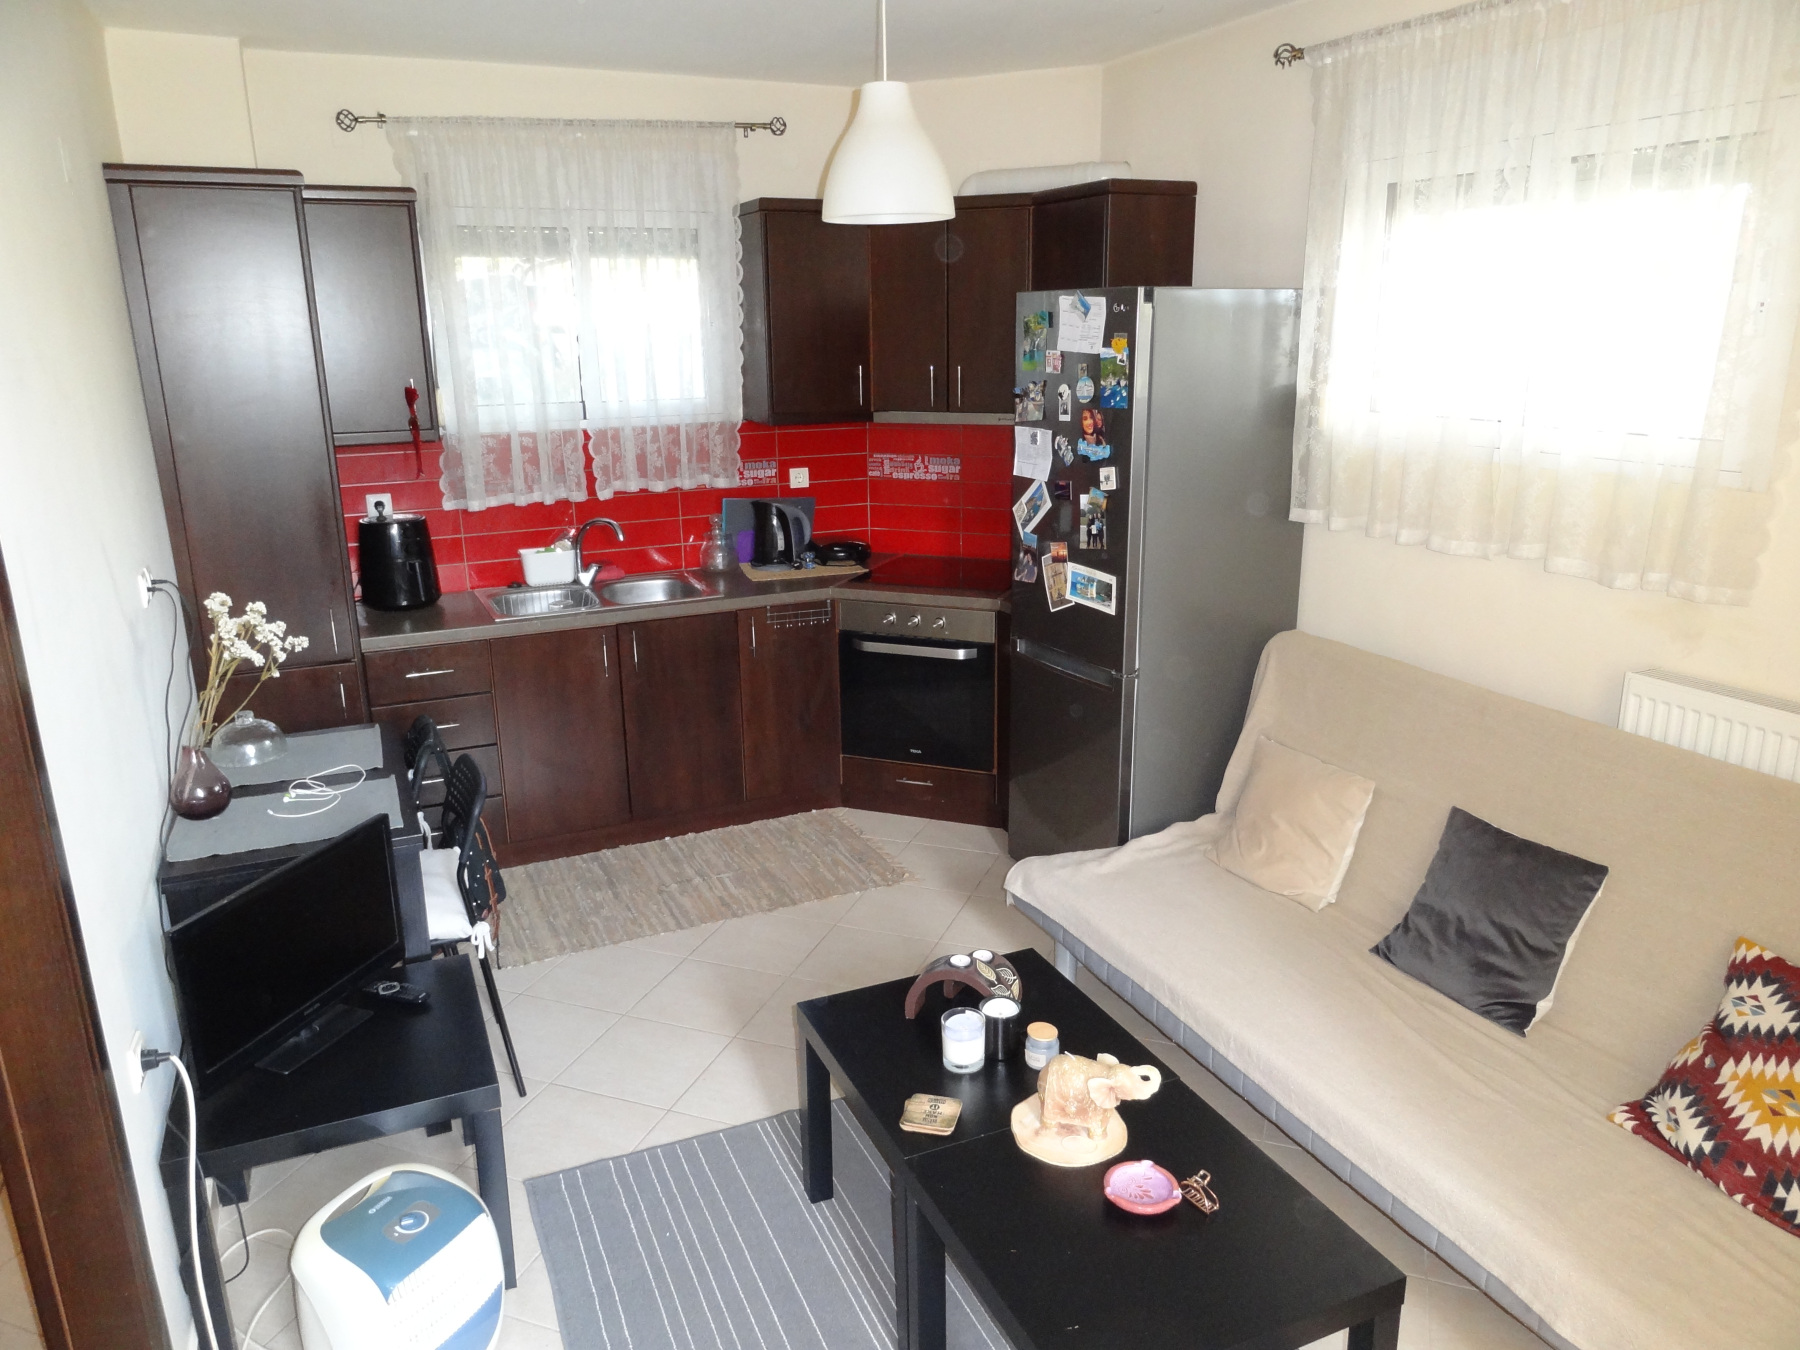 For rent semi-basement furnished studio apartment 42 sq.m. in Kardamitsia, Ioannina, near Ethniki Antistaseos street